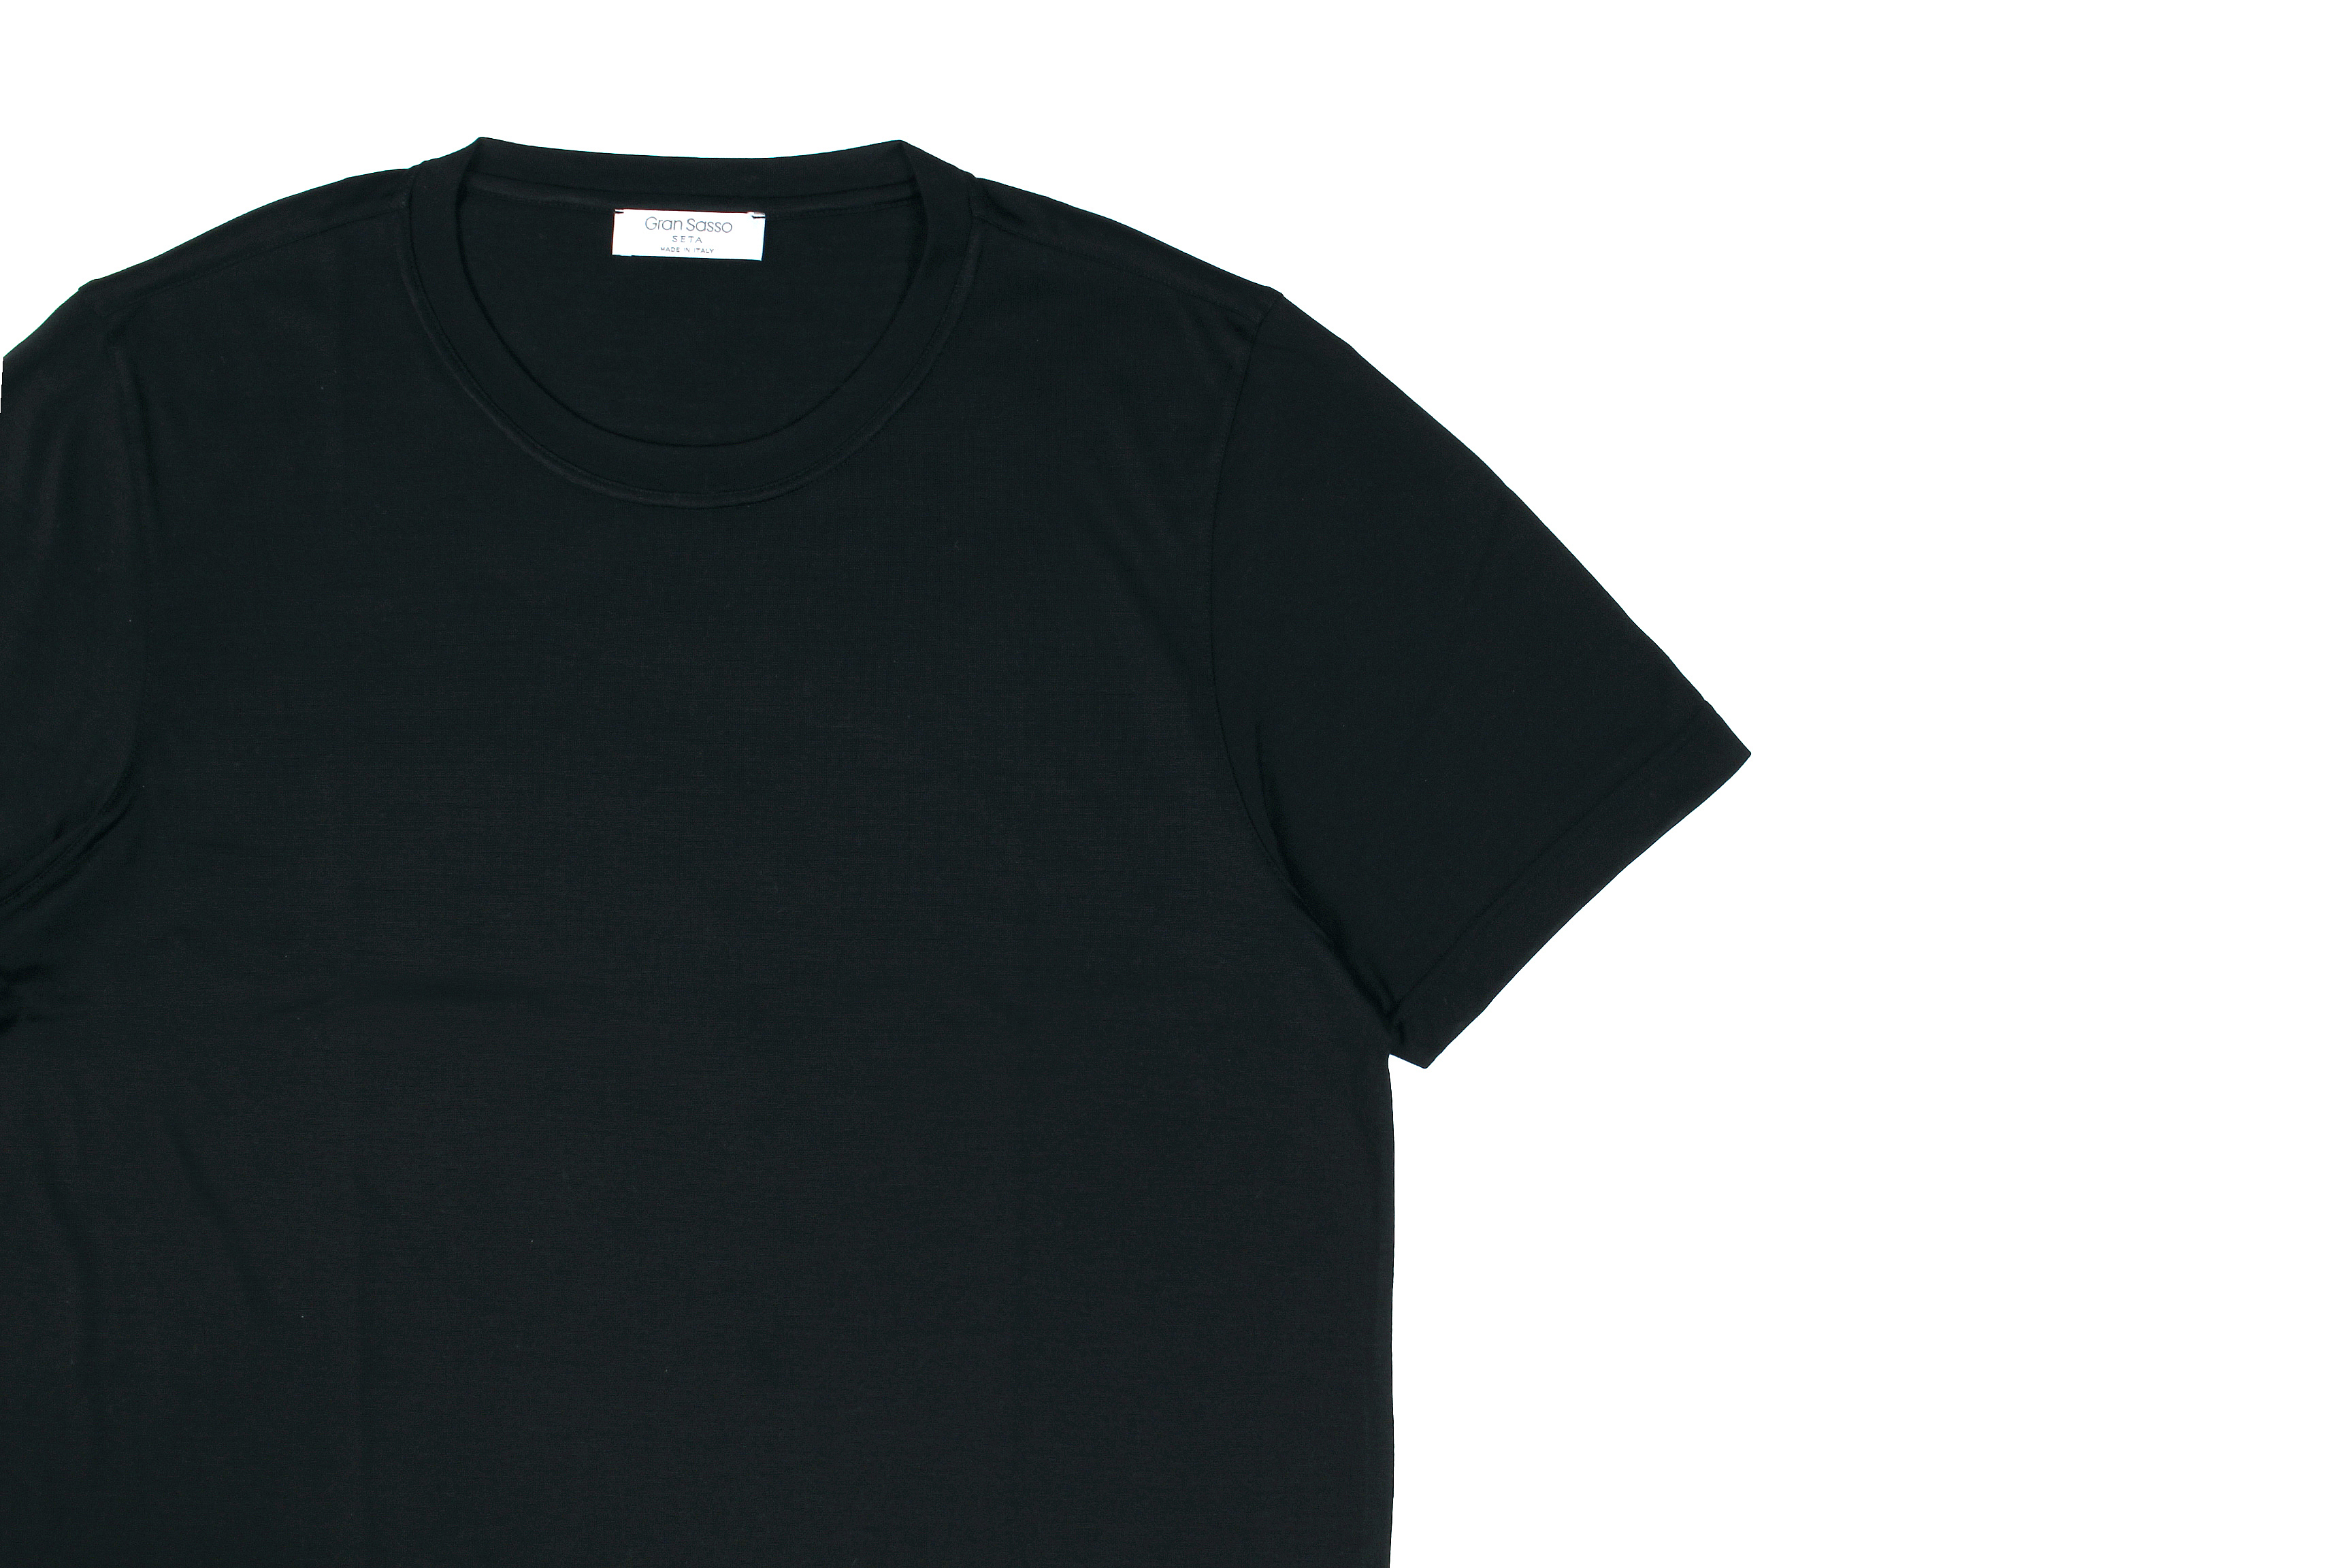 Gran Sasso (グランサッソ) Silk T-shirt (シルク Tシャツ) SETA (シルク 100%) ショートスリーブ シルク Tシャツ BLACK (ブラック・303) made in italy (イタリア製) 2020 春夏新作 愛知 名古屋 altoediritto アルトエデリット